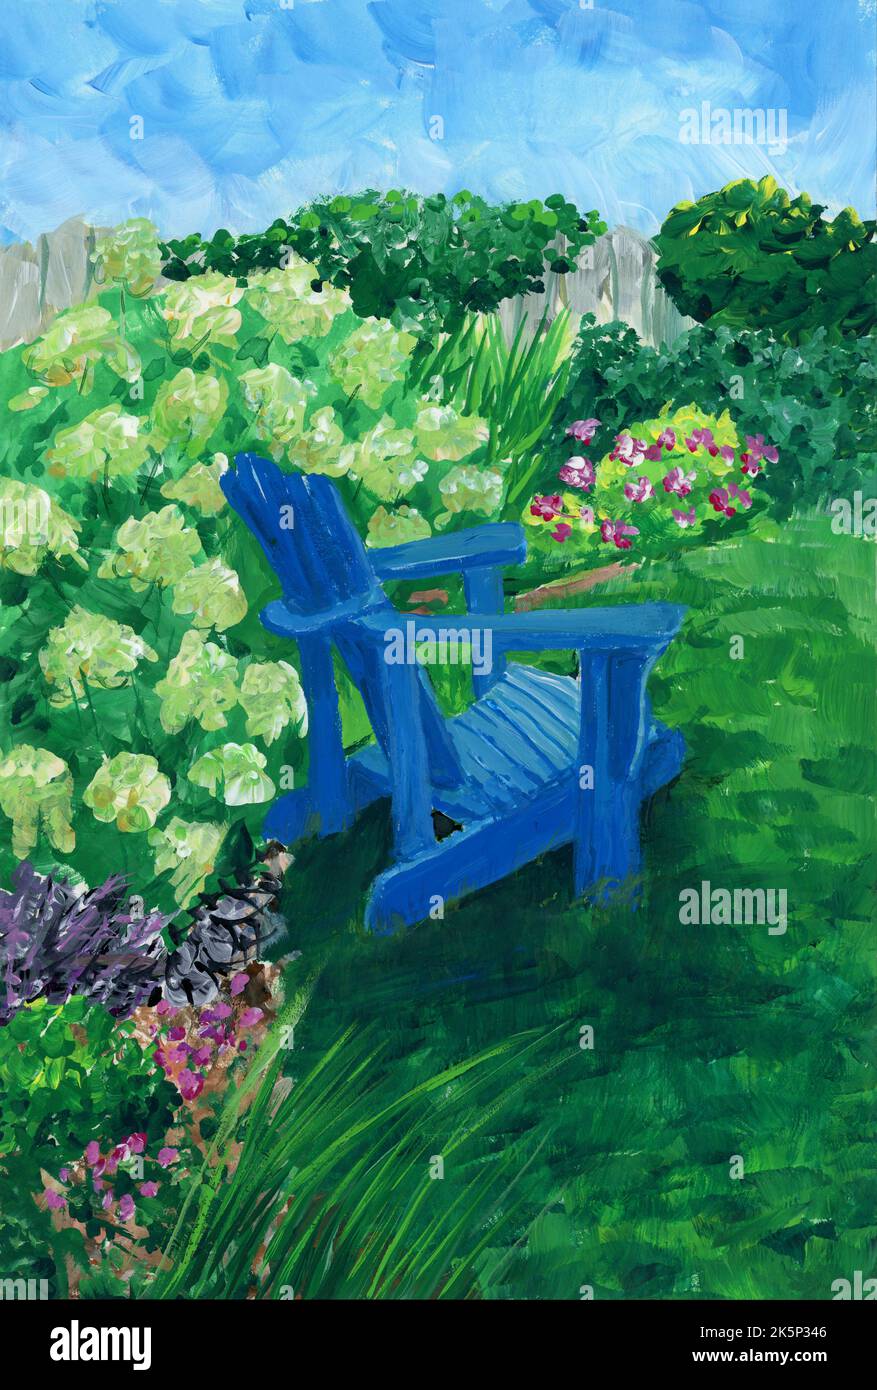 Gouache painting of an Adirondack chair in a backyard garden. Stock Photo